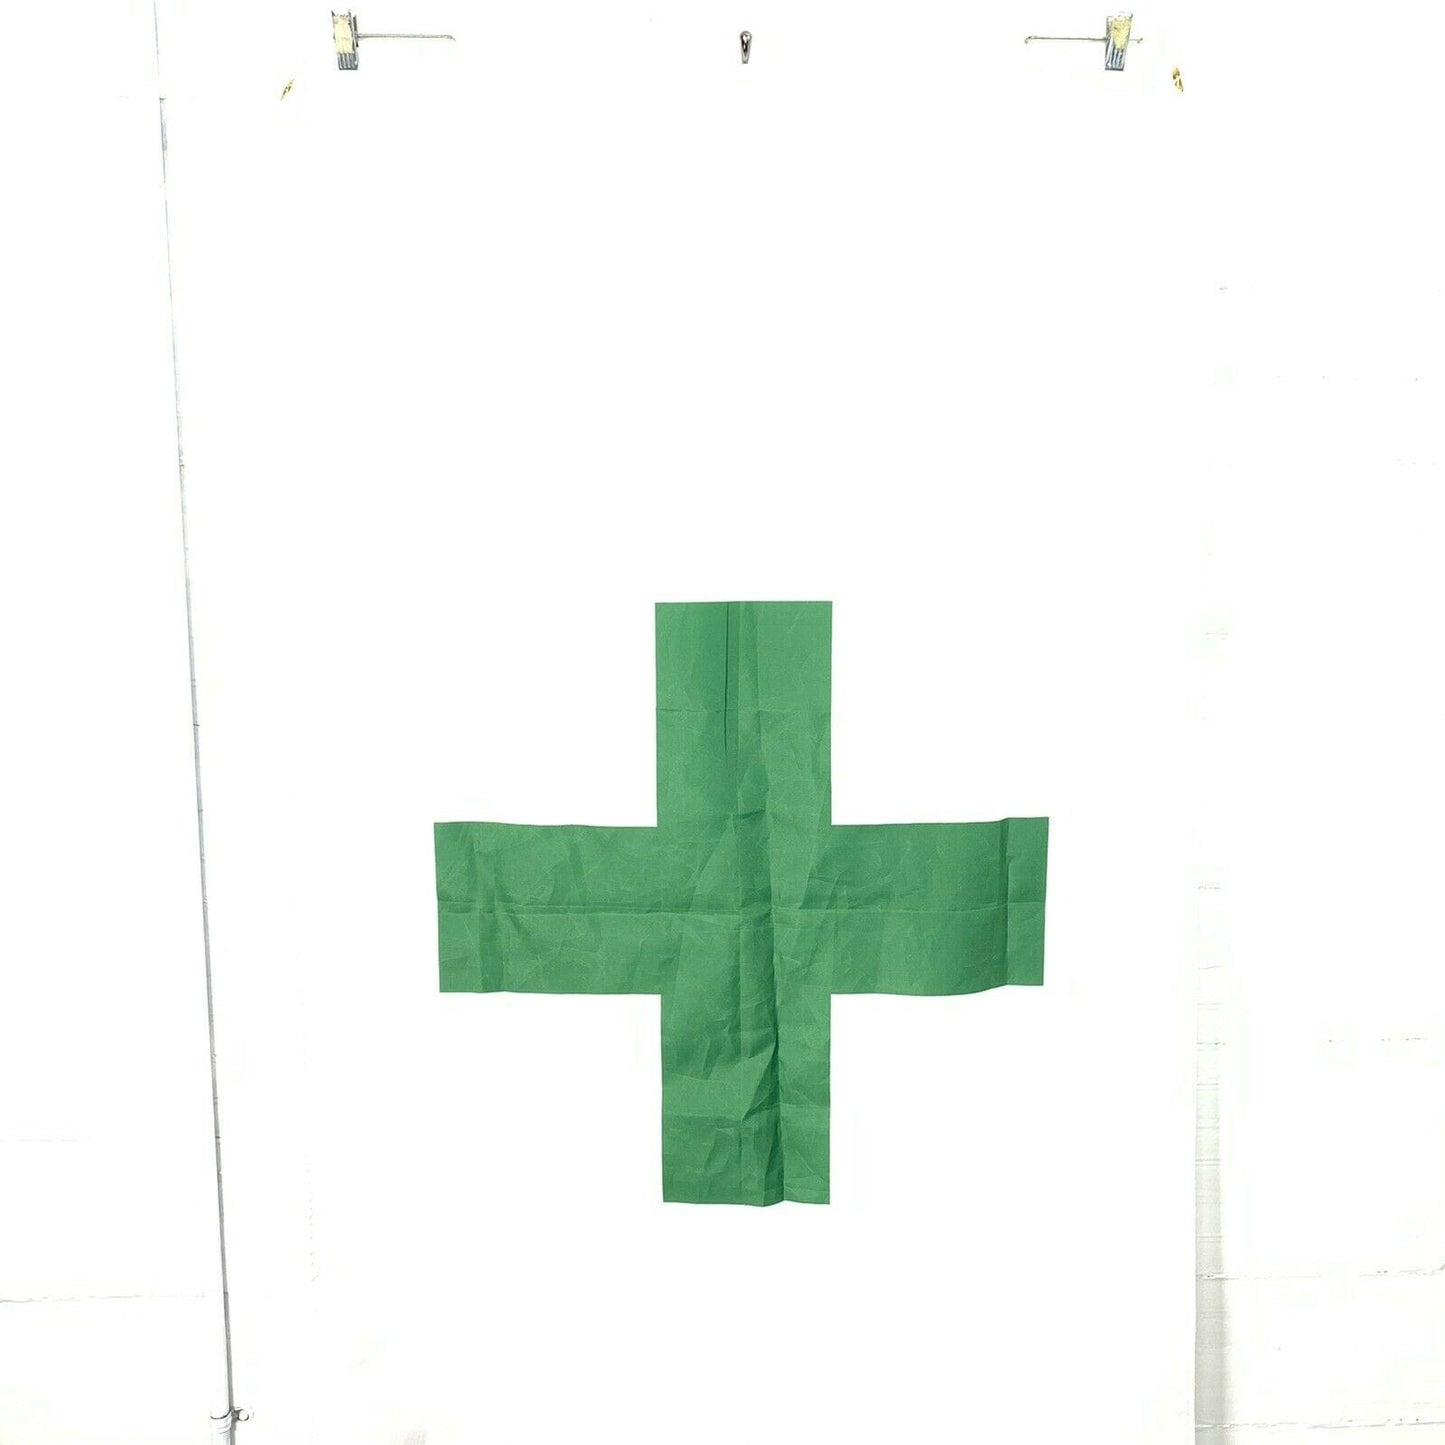 Premium Quality Marijuana Green Cross Flag 3x5 Woven Poly Nylon - Very Good Condition